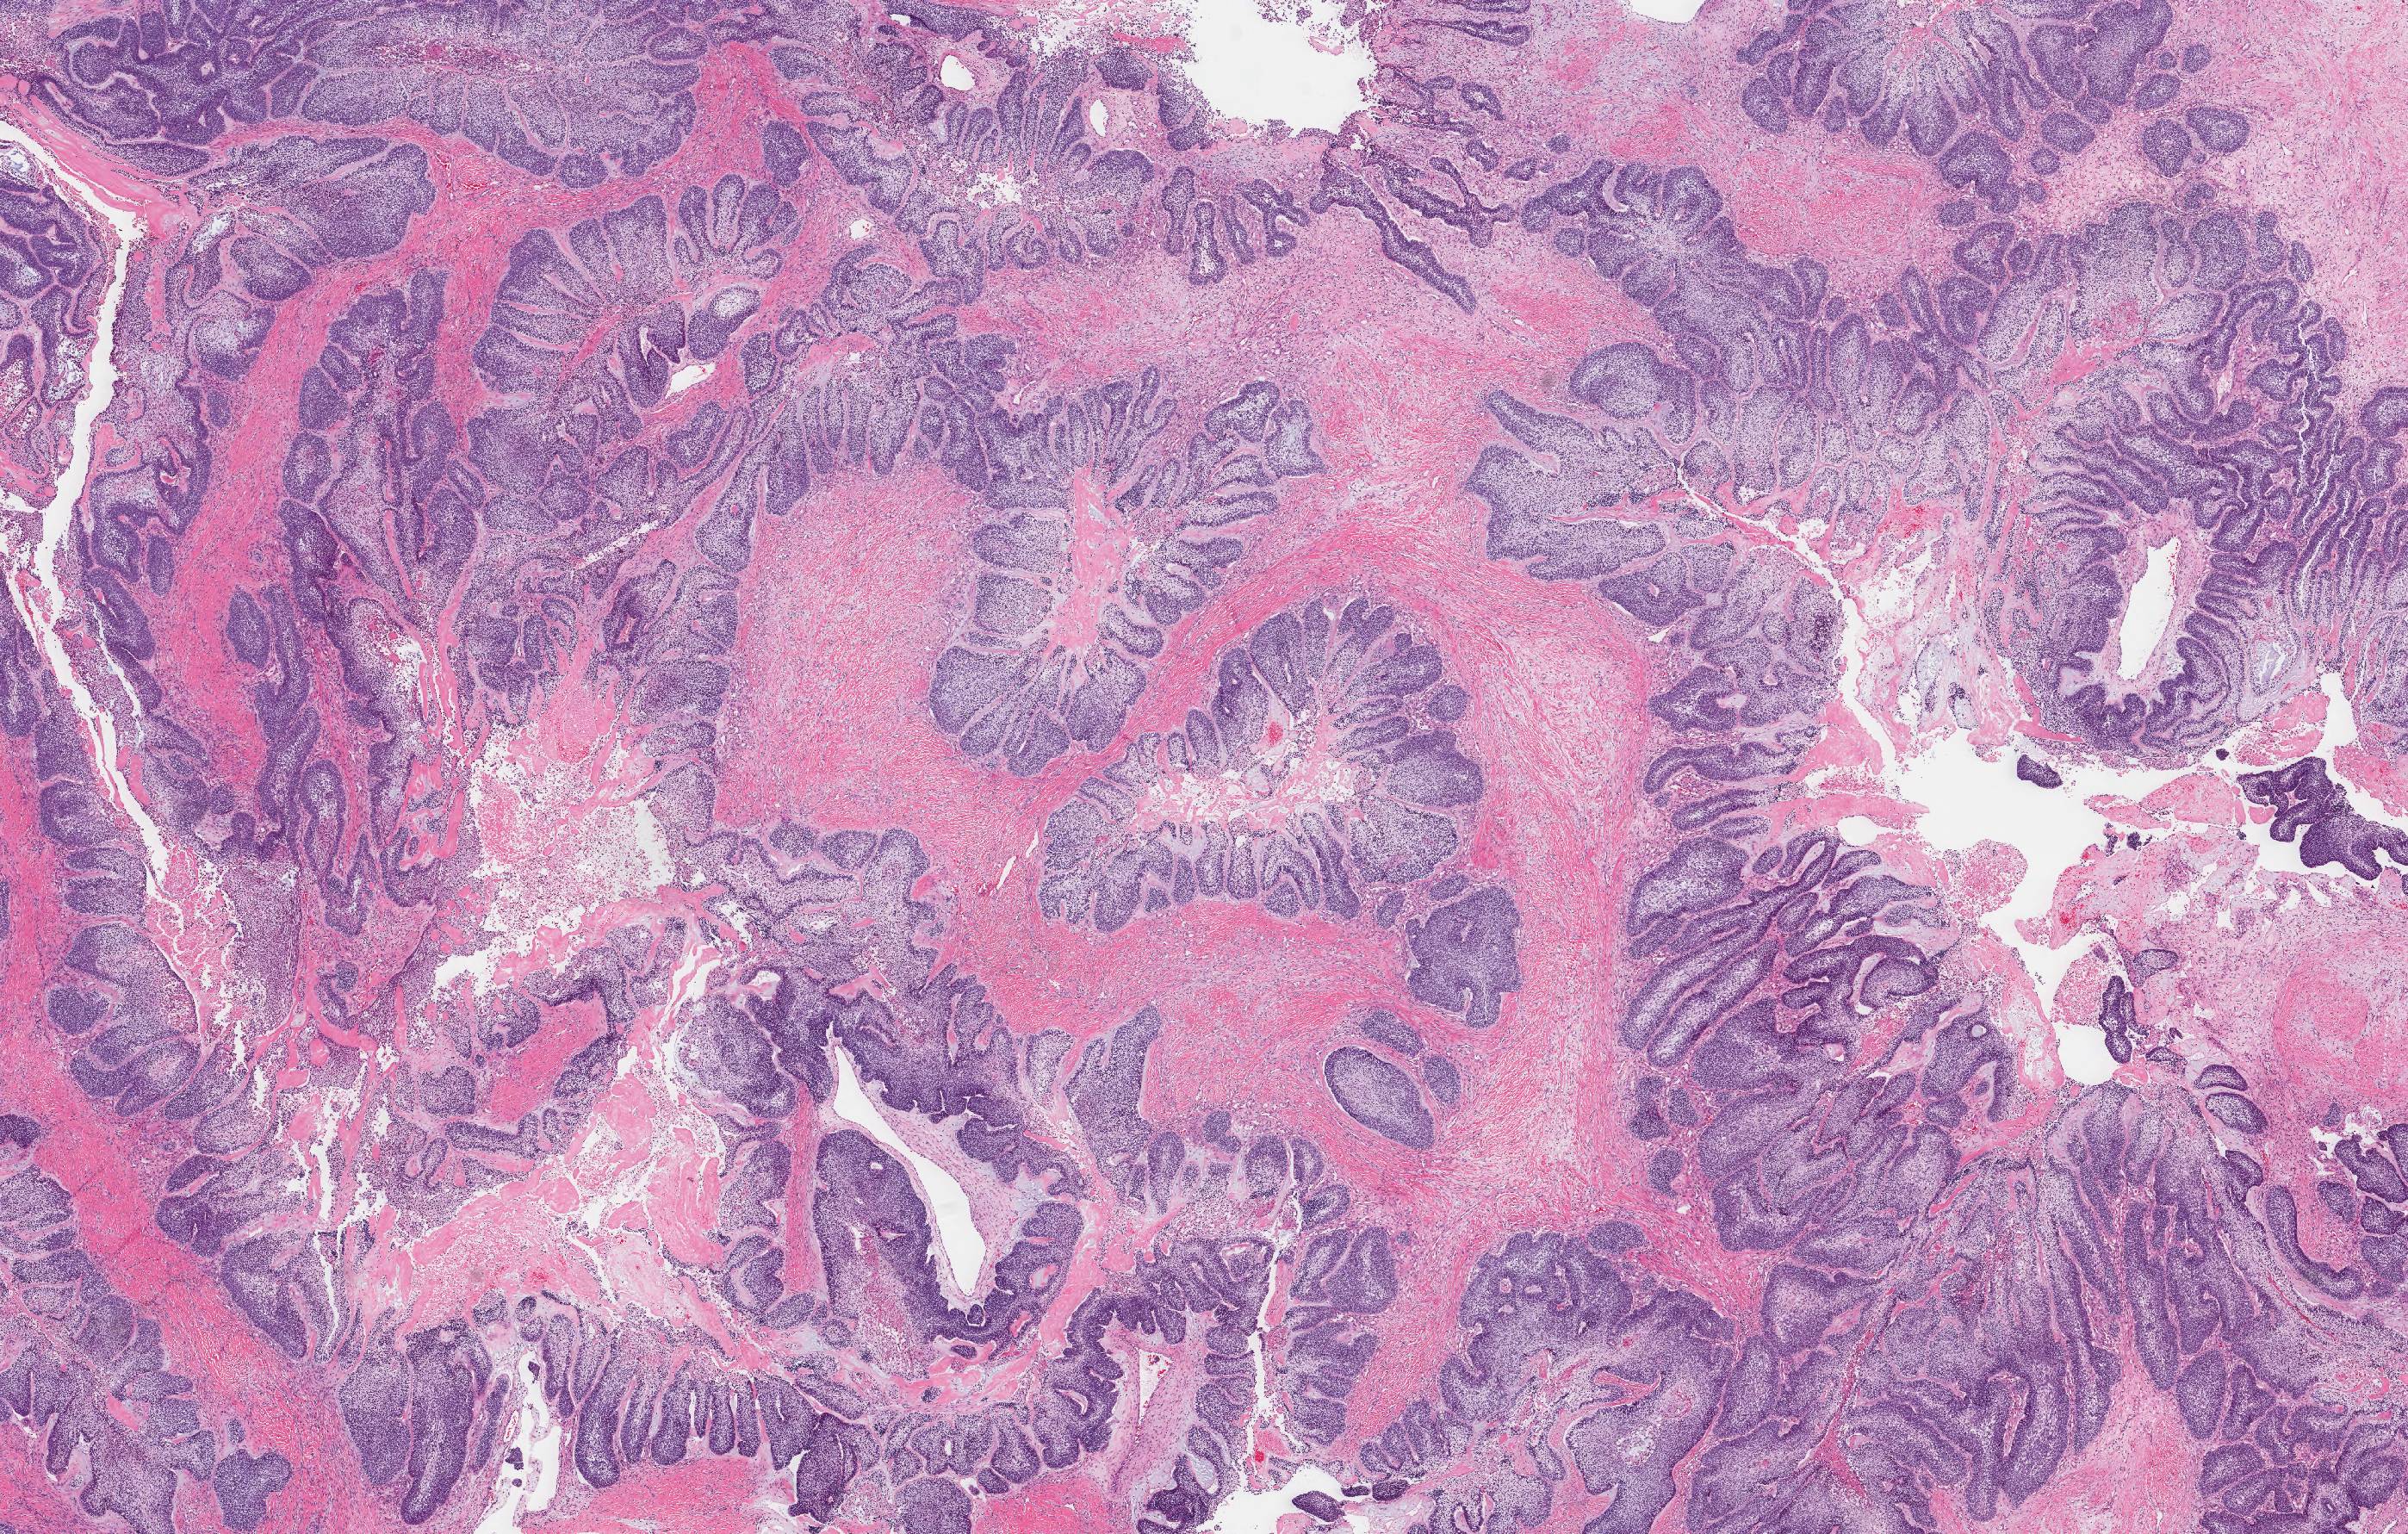 Ameloblastic carcinoma